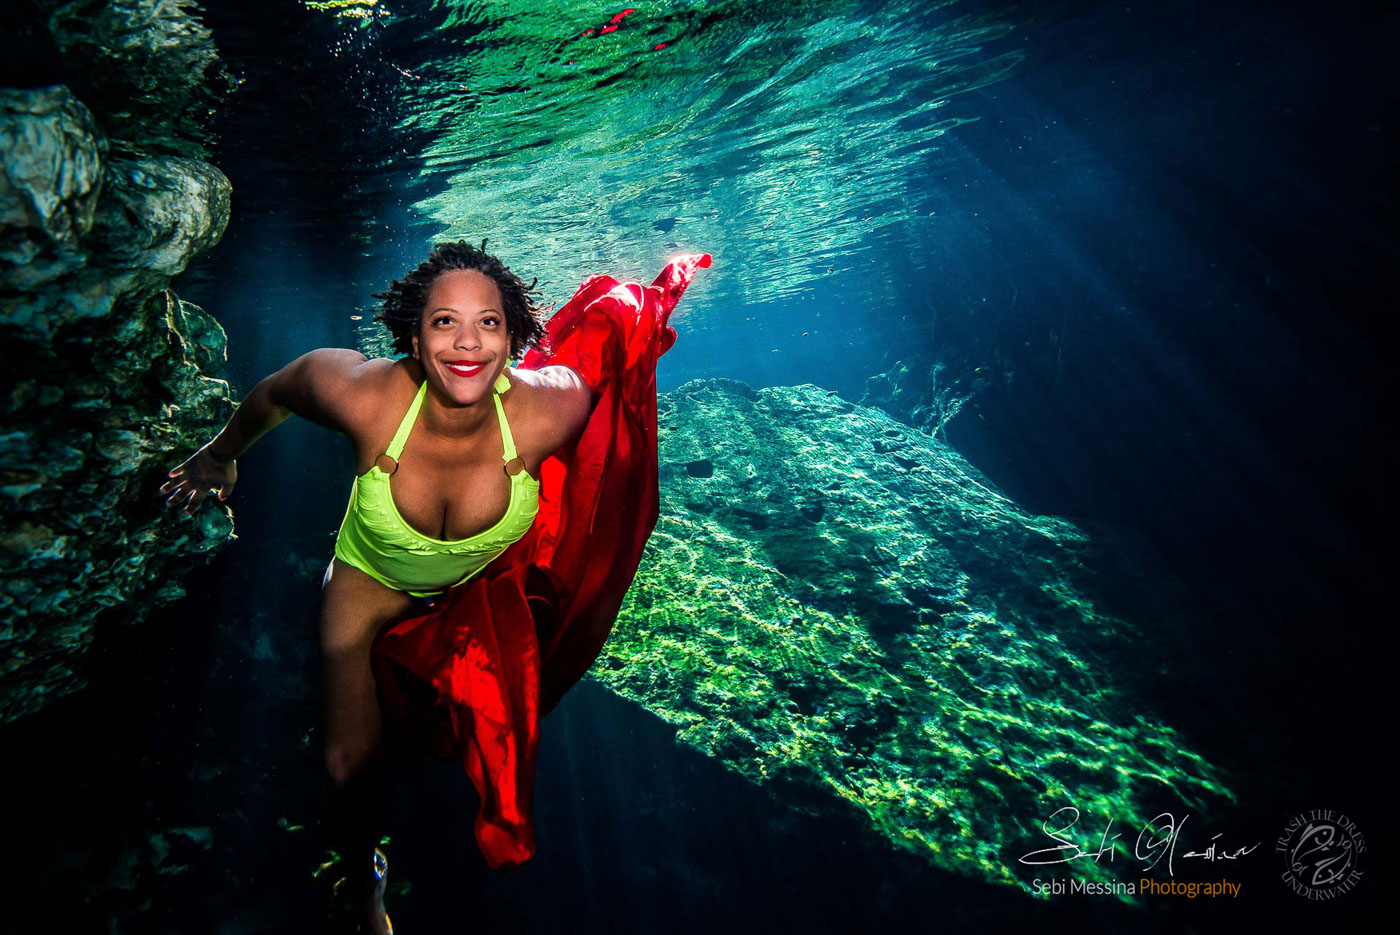 Birthday Underwater Photos Cenote Tulum - Sebi Messina Photography